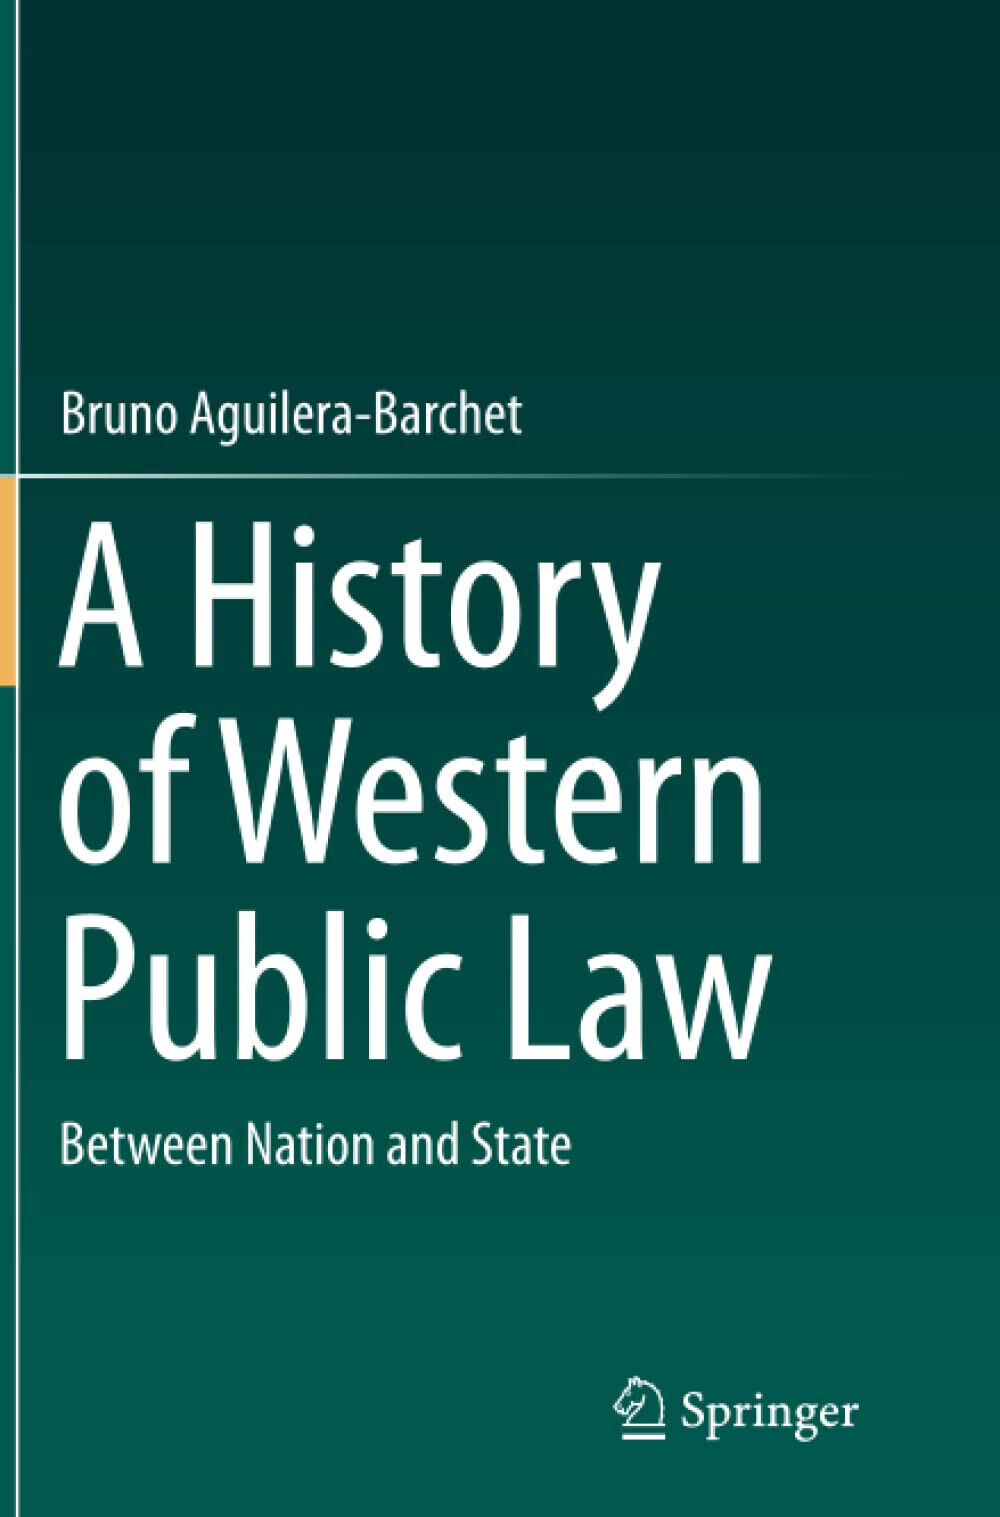 A History of Western Public Law - Bruno Aguilera-Barchet - Springer, 2016